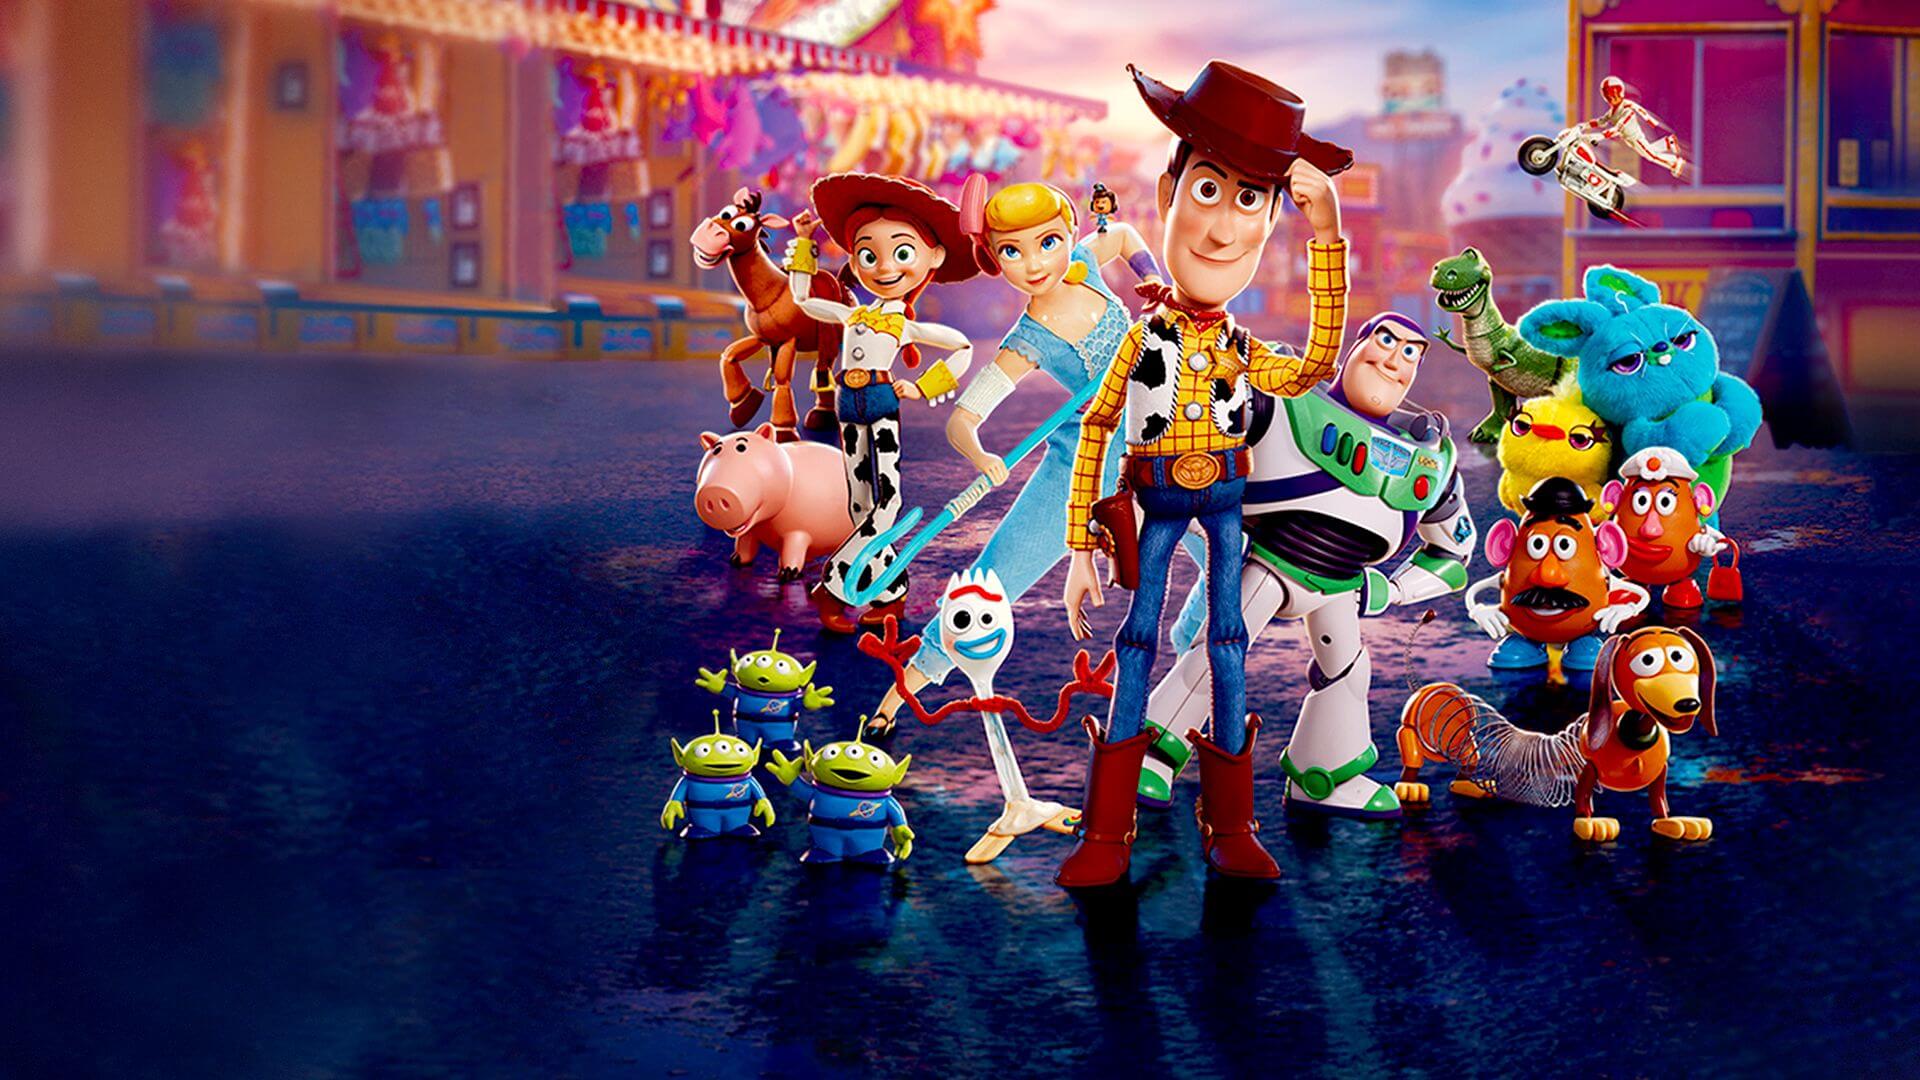 Toy Story 4 ganador del Oscar a Mejor Película Animada